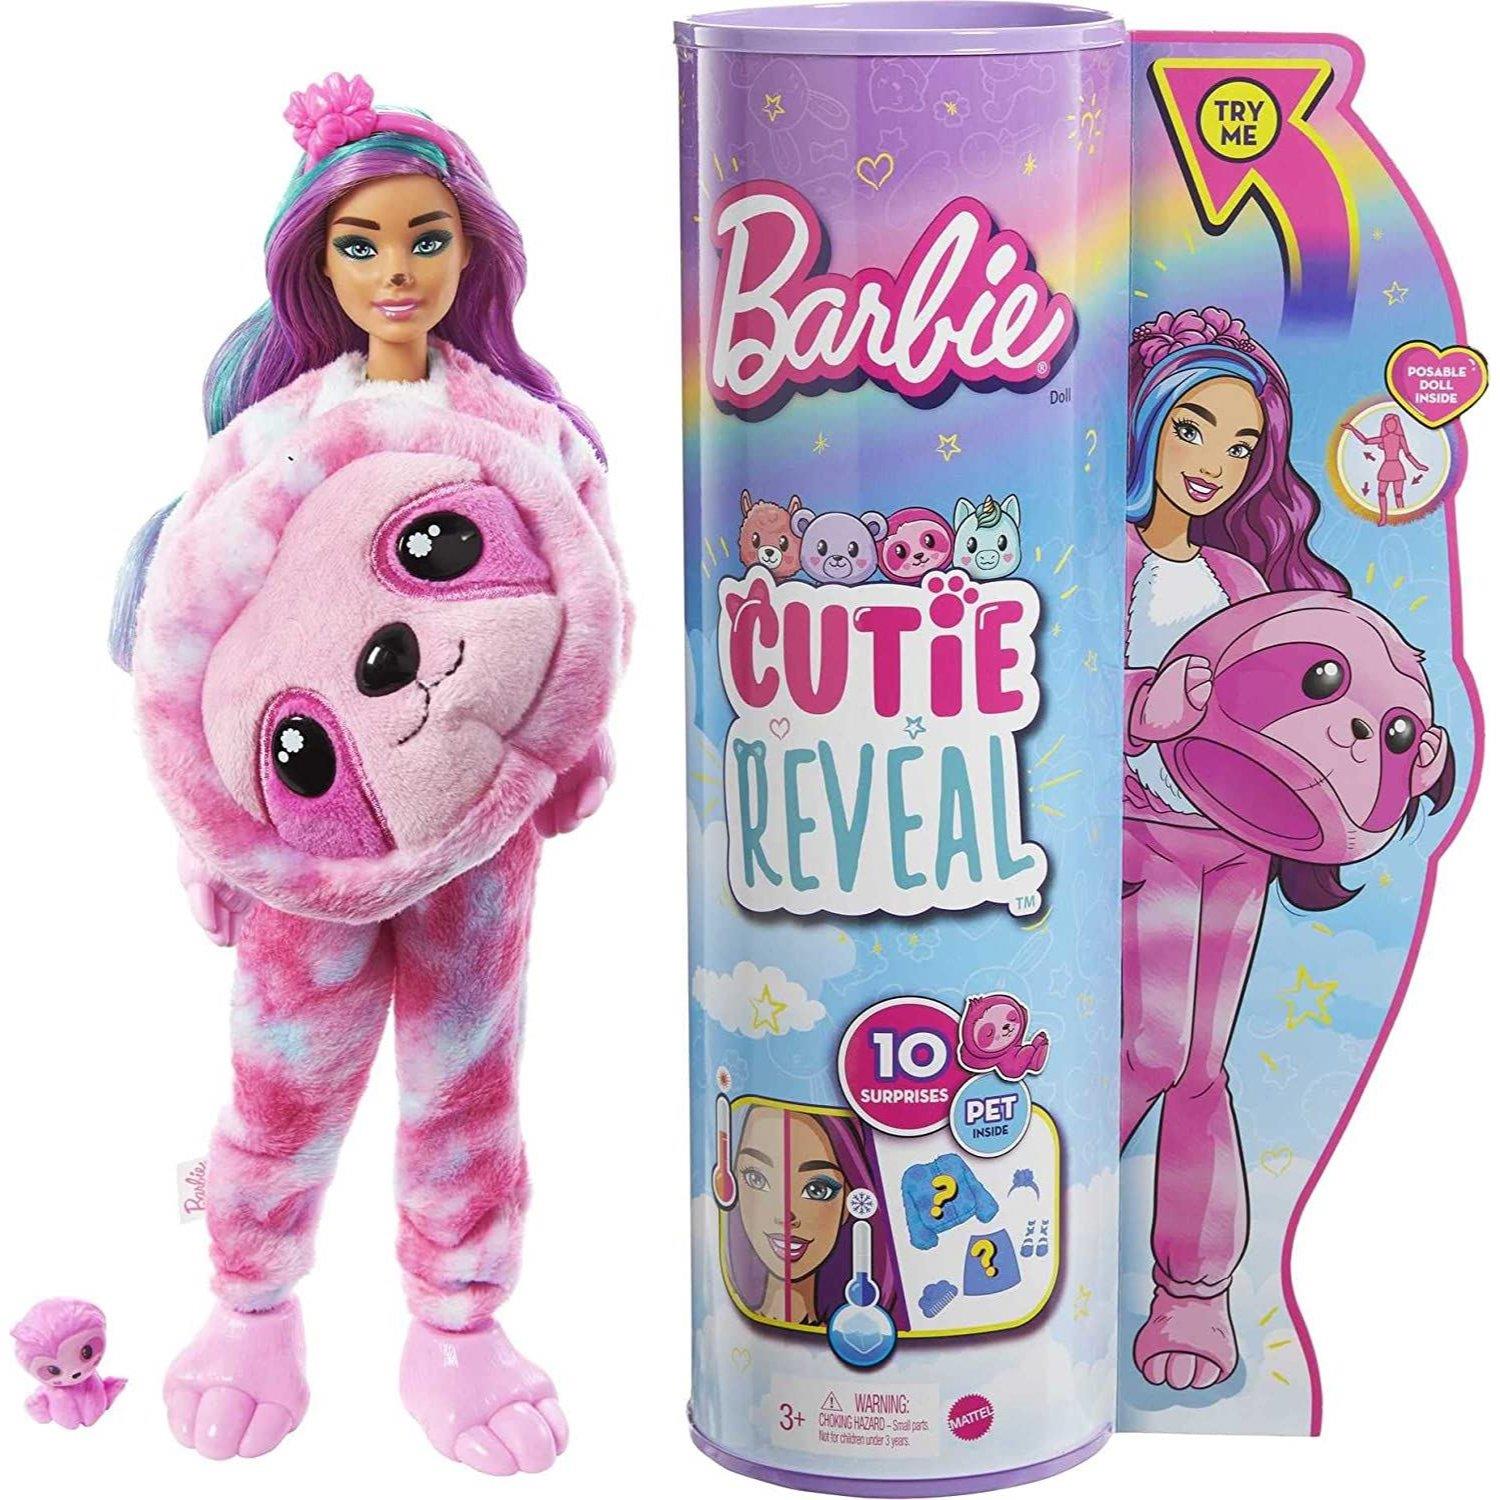 Barbie Barbie Doll Barbie Cutie Reveal Doll with Sloth Plush